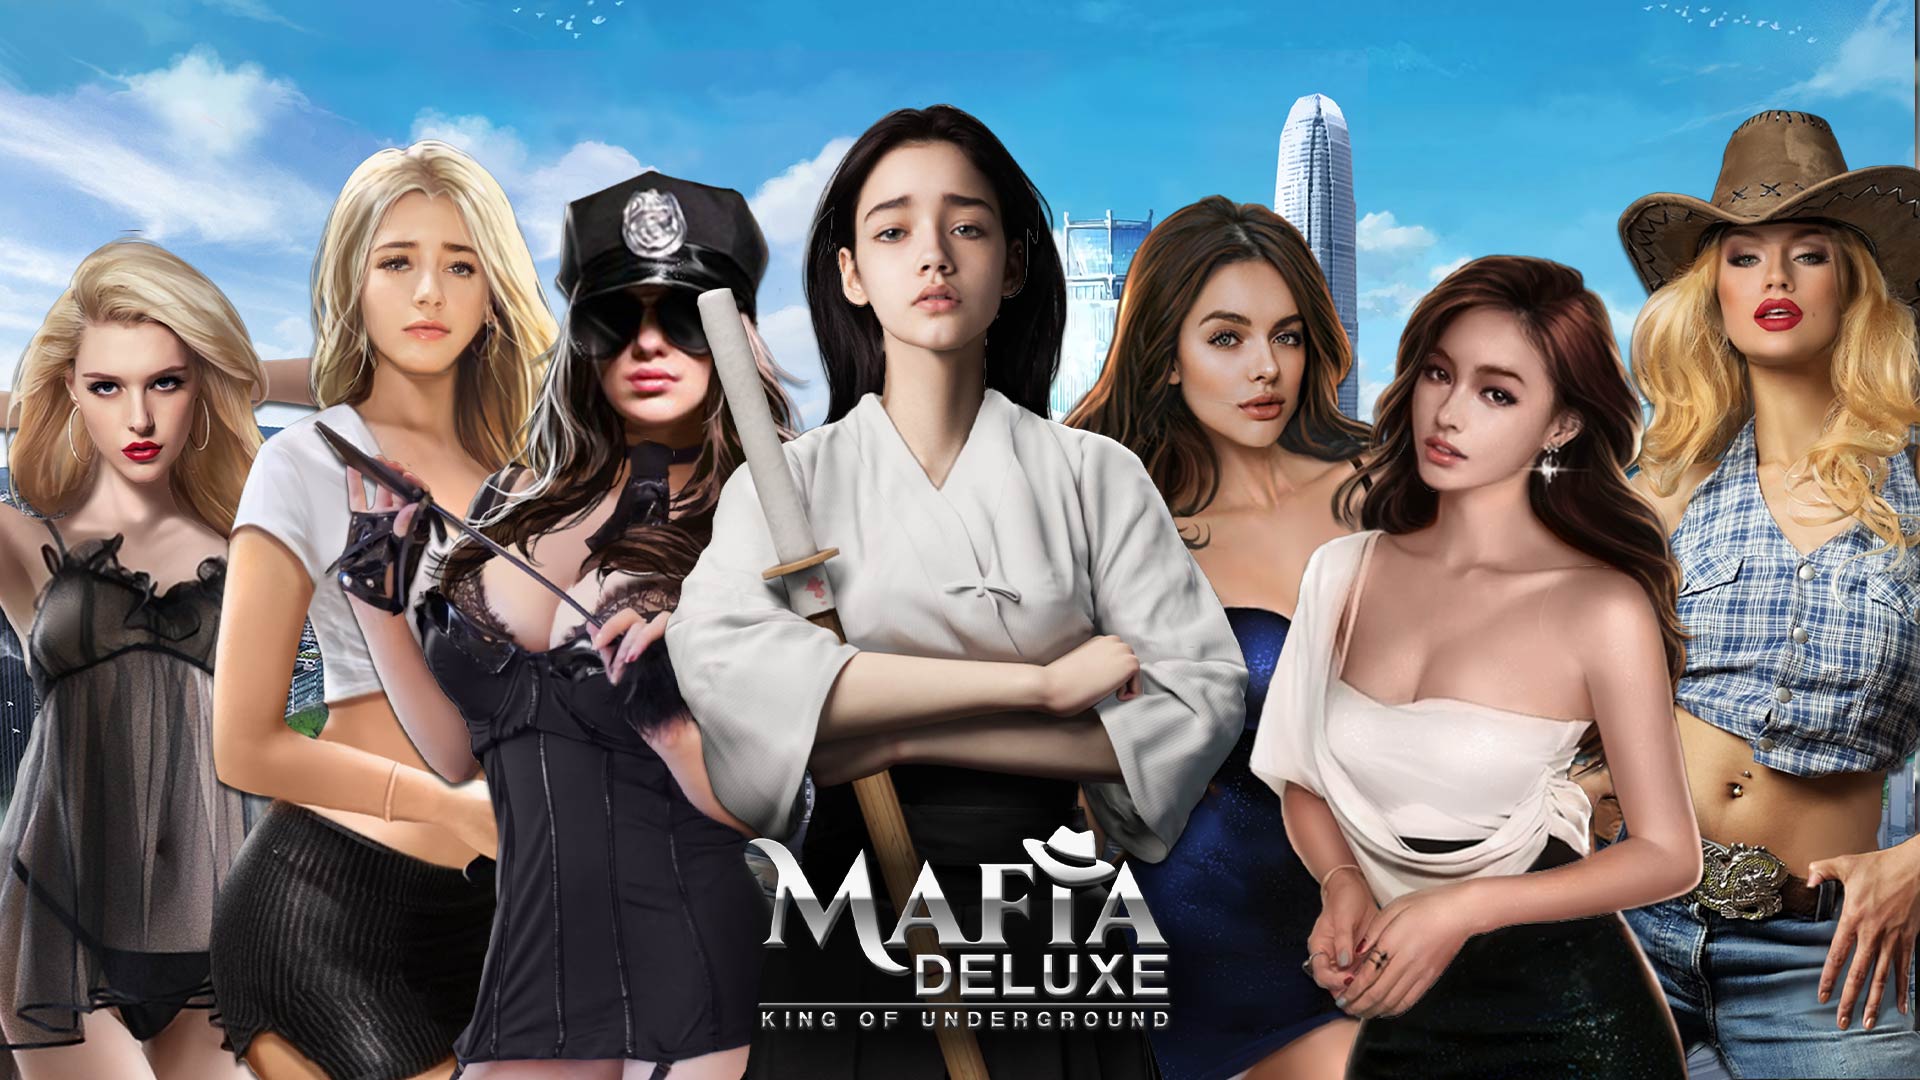 Mafia King of Underground Deluxe - Simulation Sex Game with APK file |  Nutaku